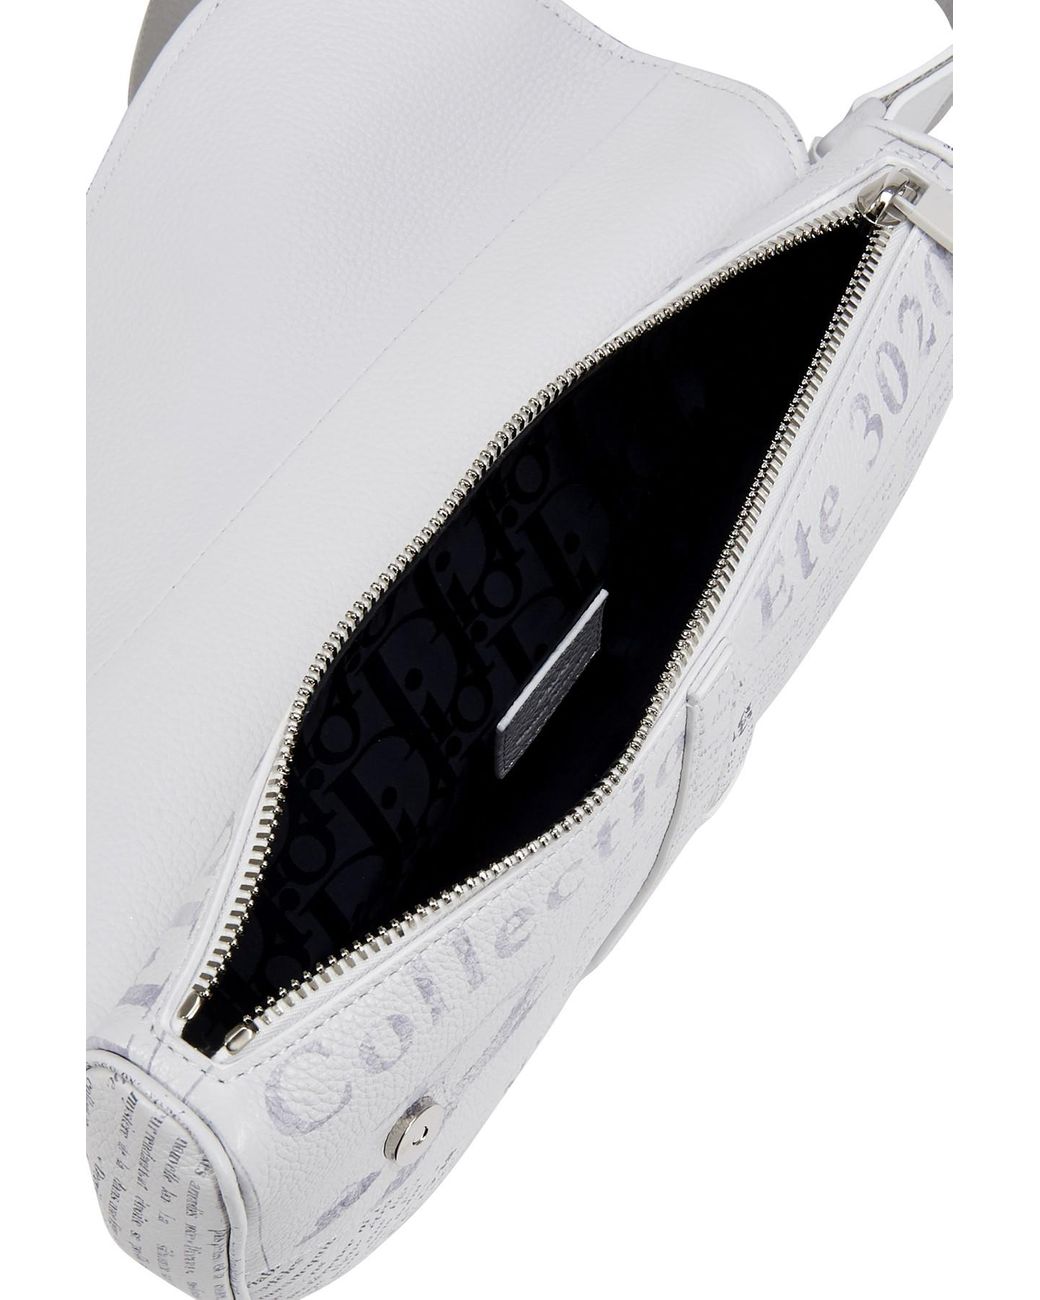 Dior Men's White Printed Calfskin And Daniel Arsham Saddle Bag